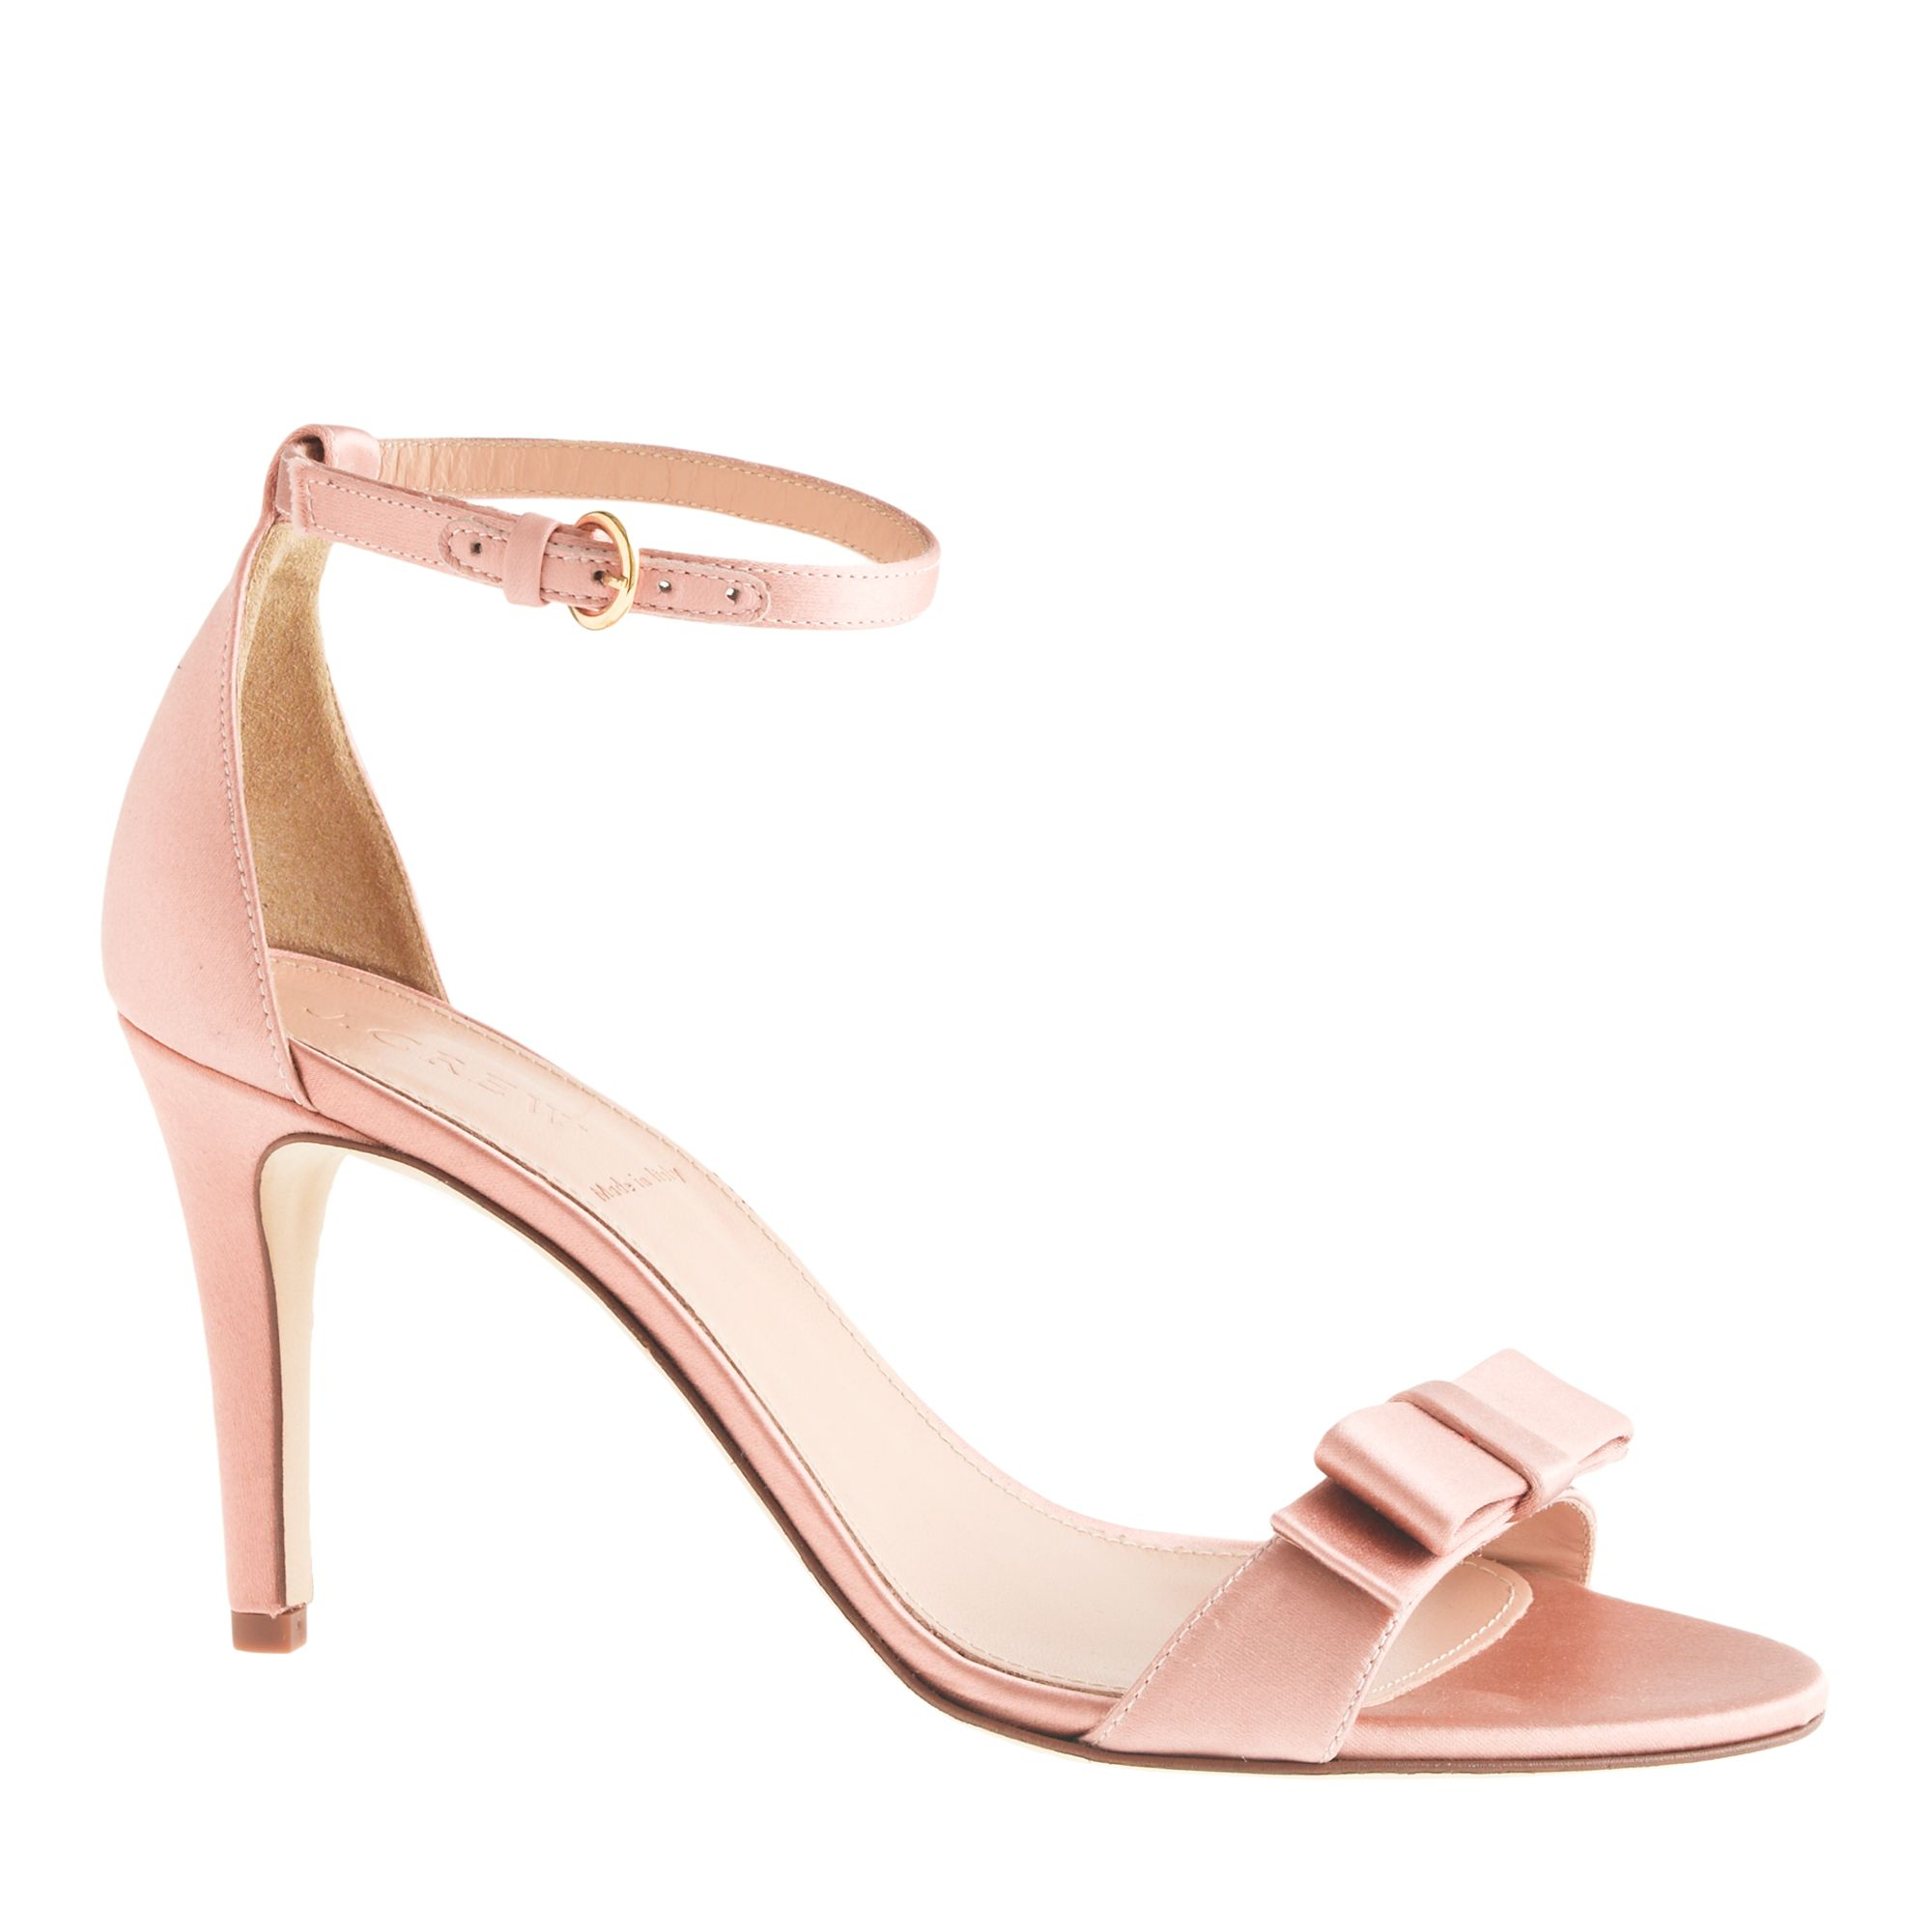 J.crew Satin Bow High-Heel Sandals in Pink (vintage blush) | Lyst